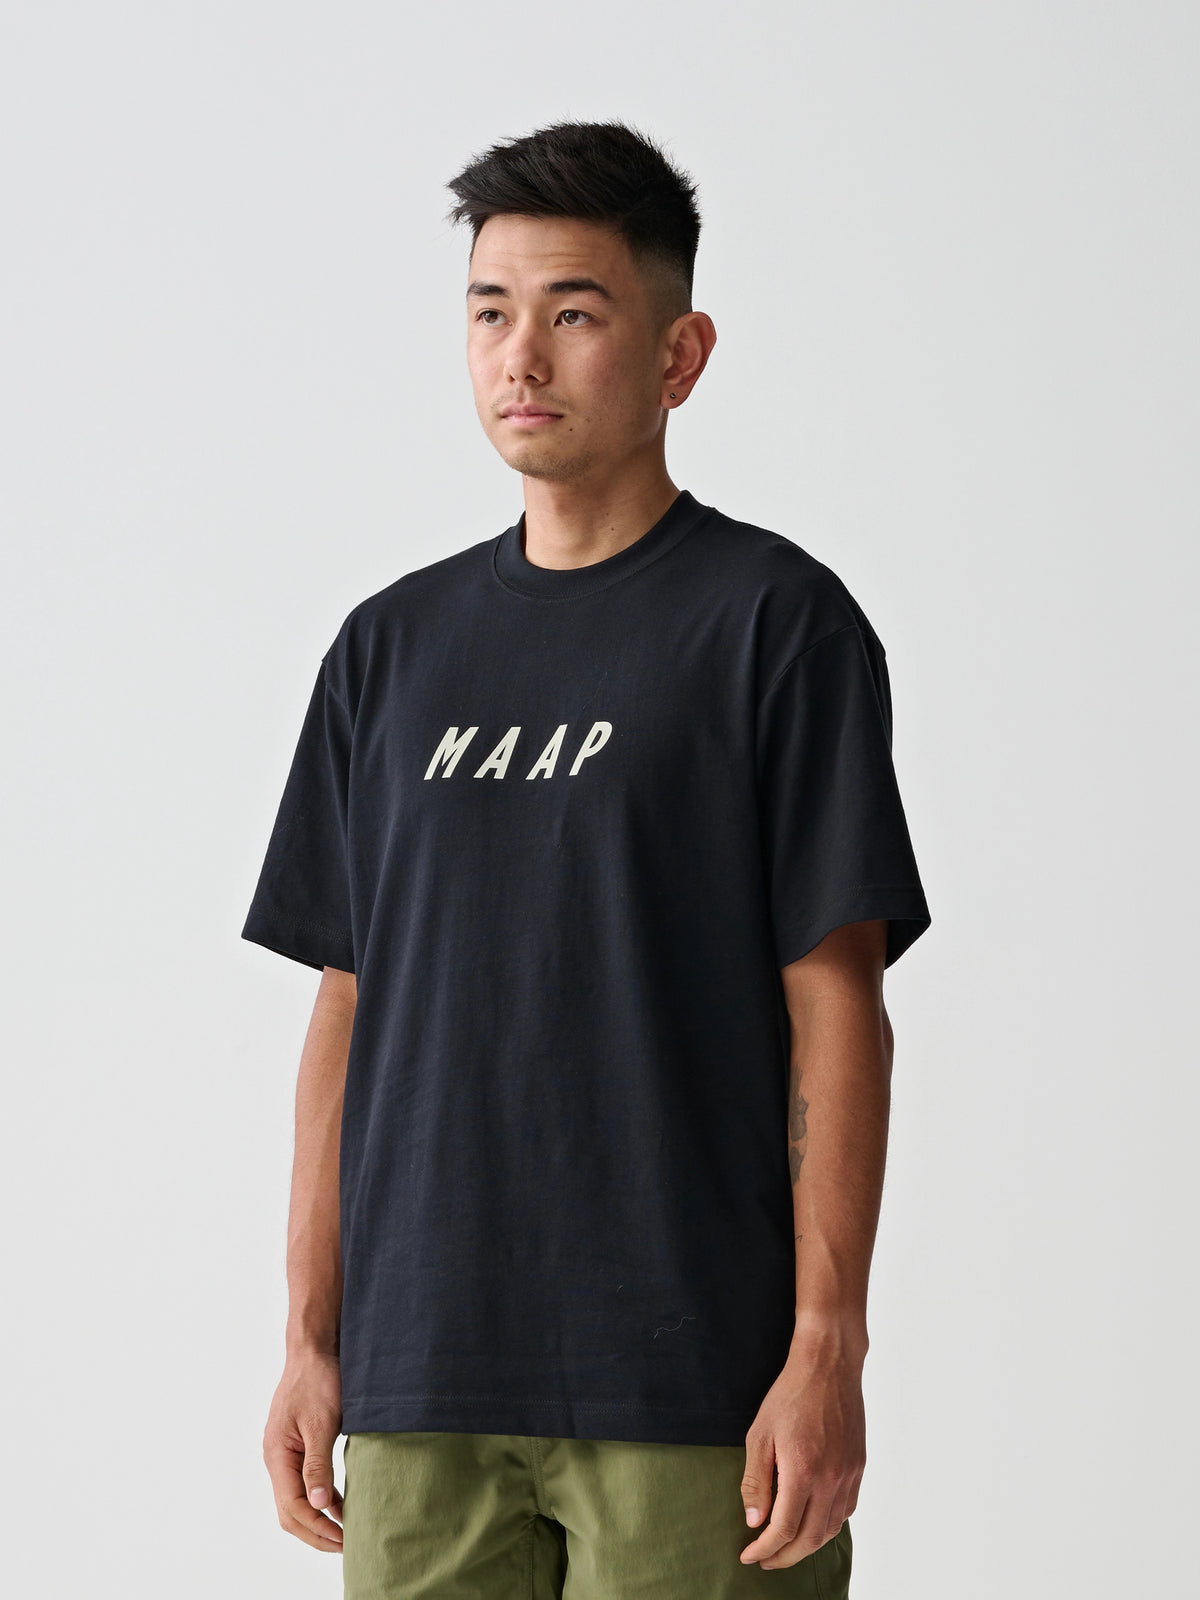 MAAP Lifeplus-Wahoo Replica Tシャツ | CYCLISM